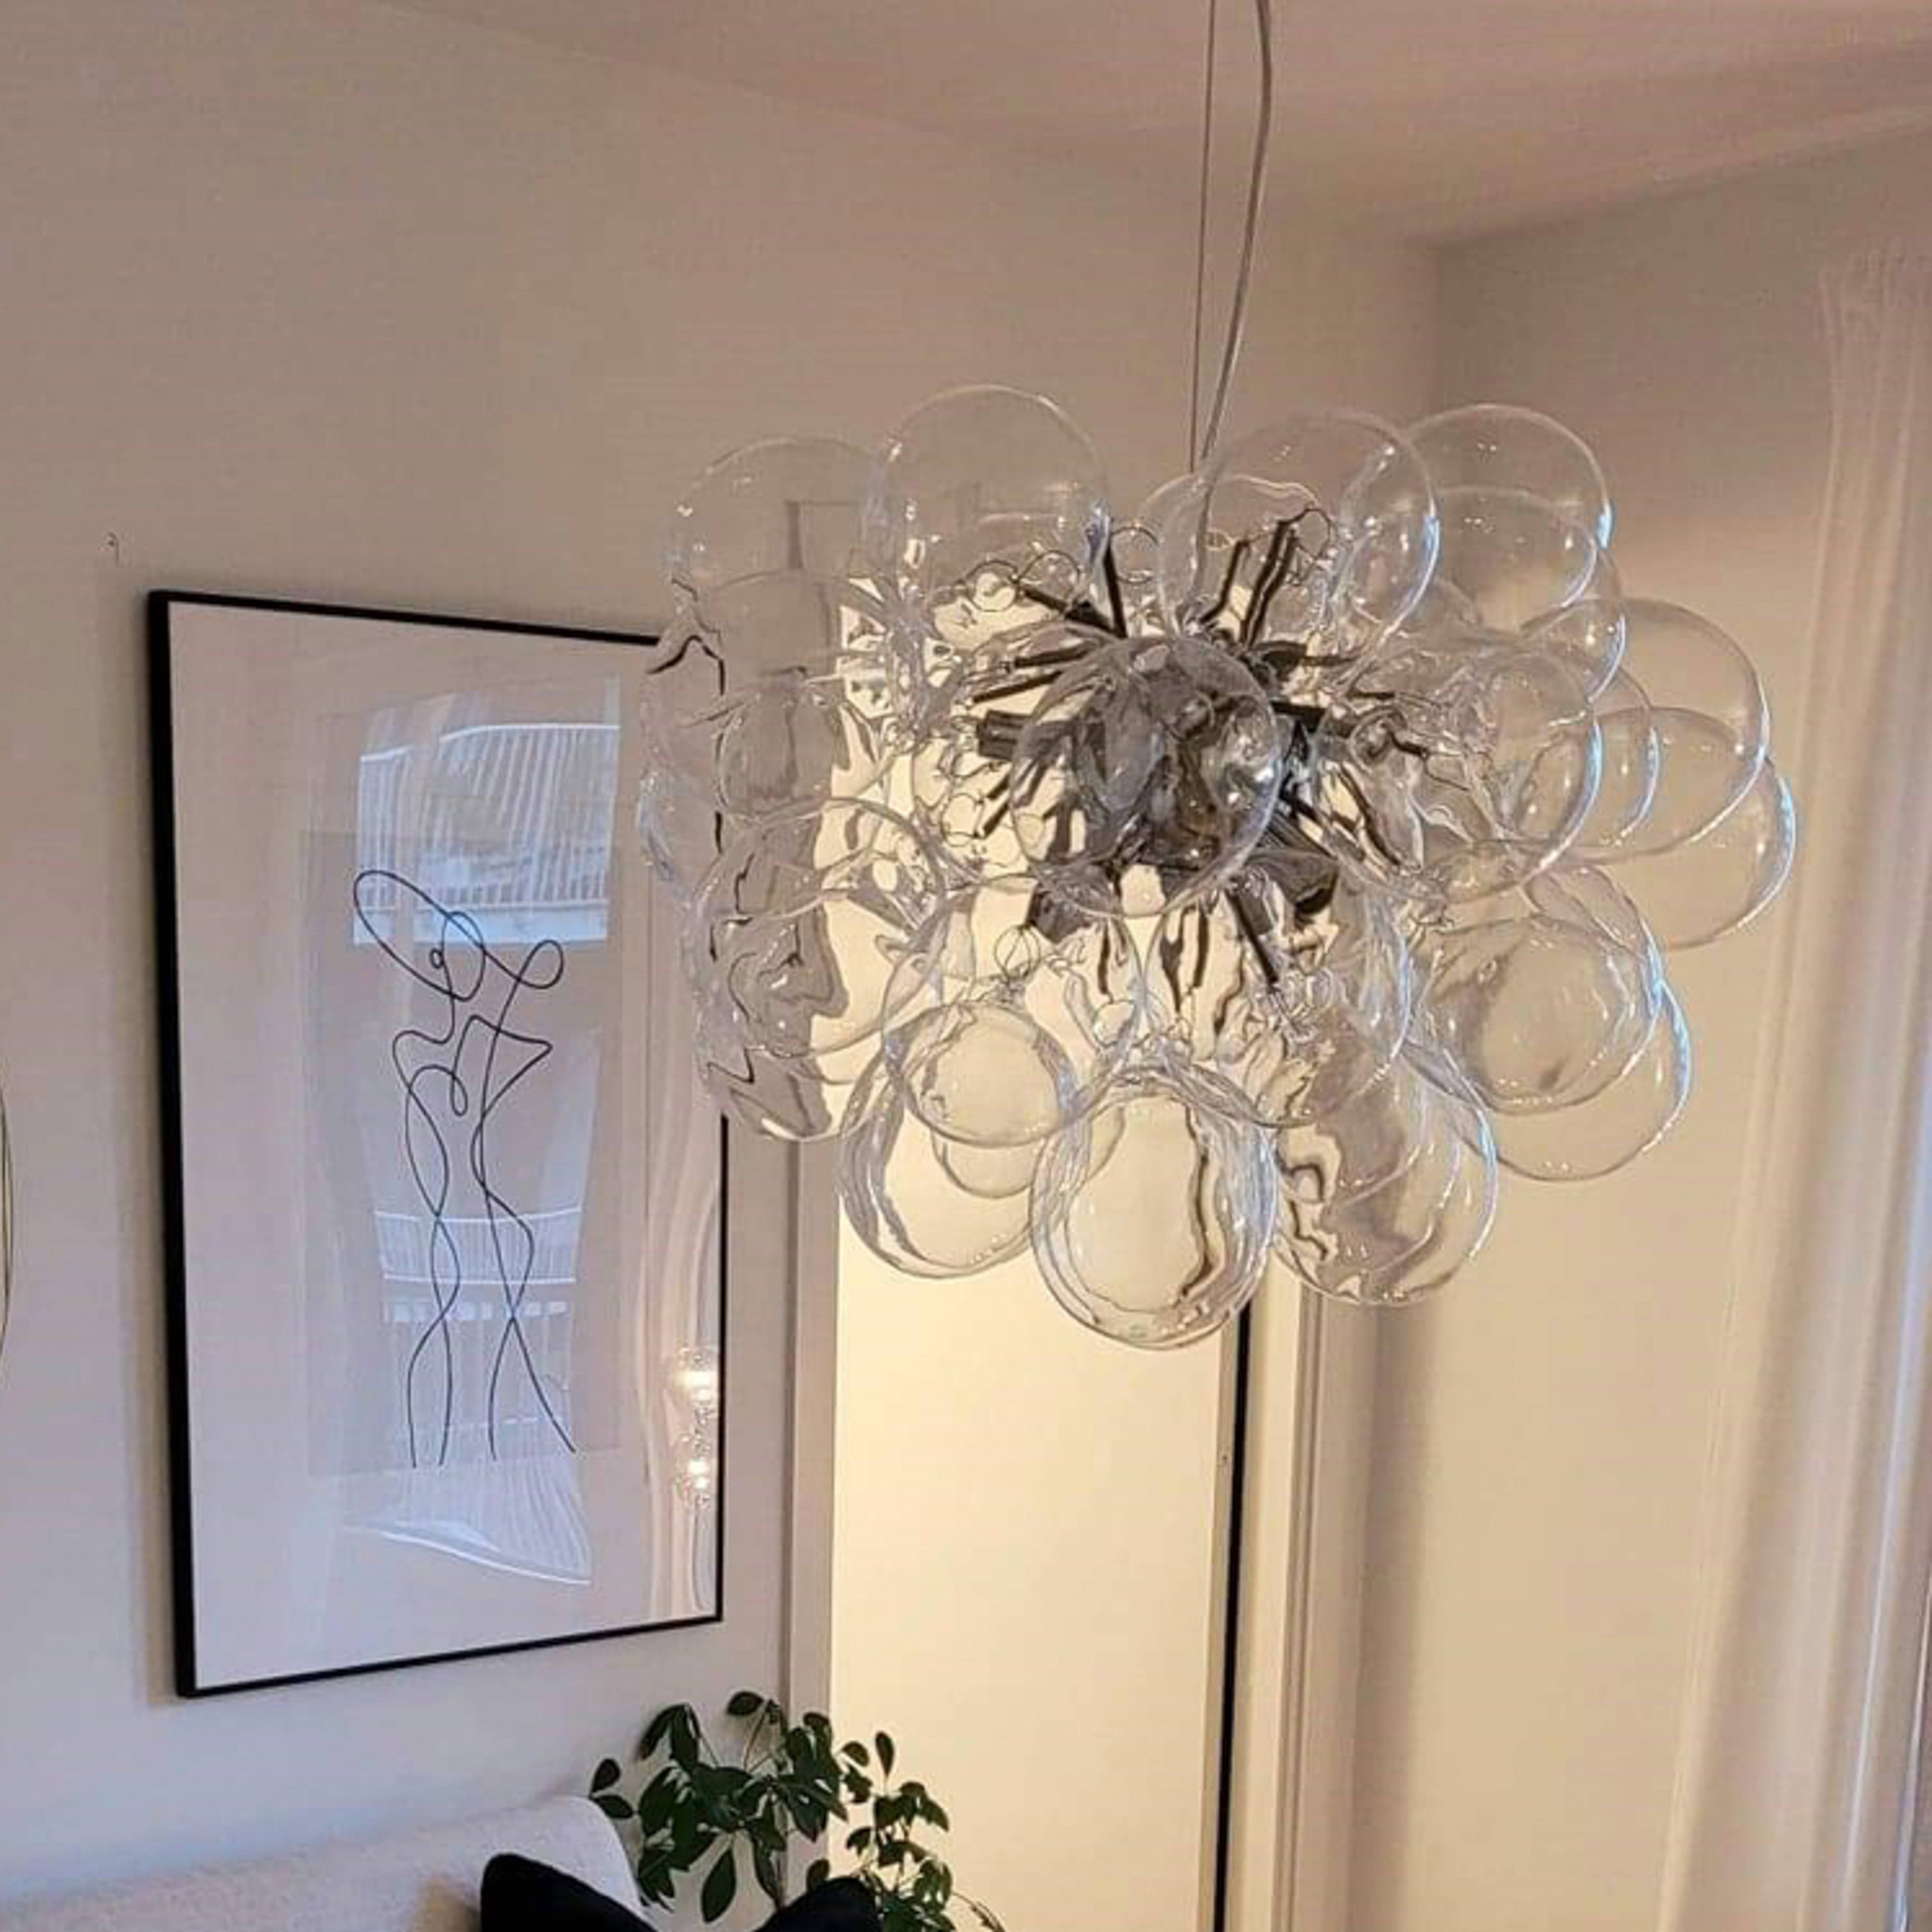 By Rydéns Gross Grande hanglamp, 62 cm, helder